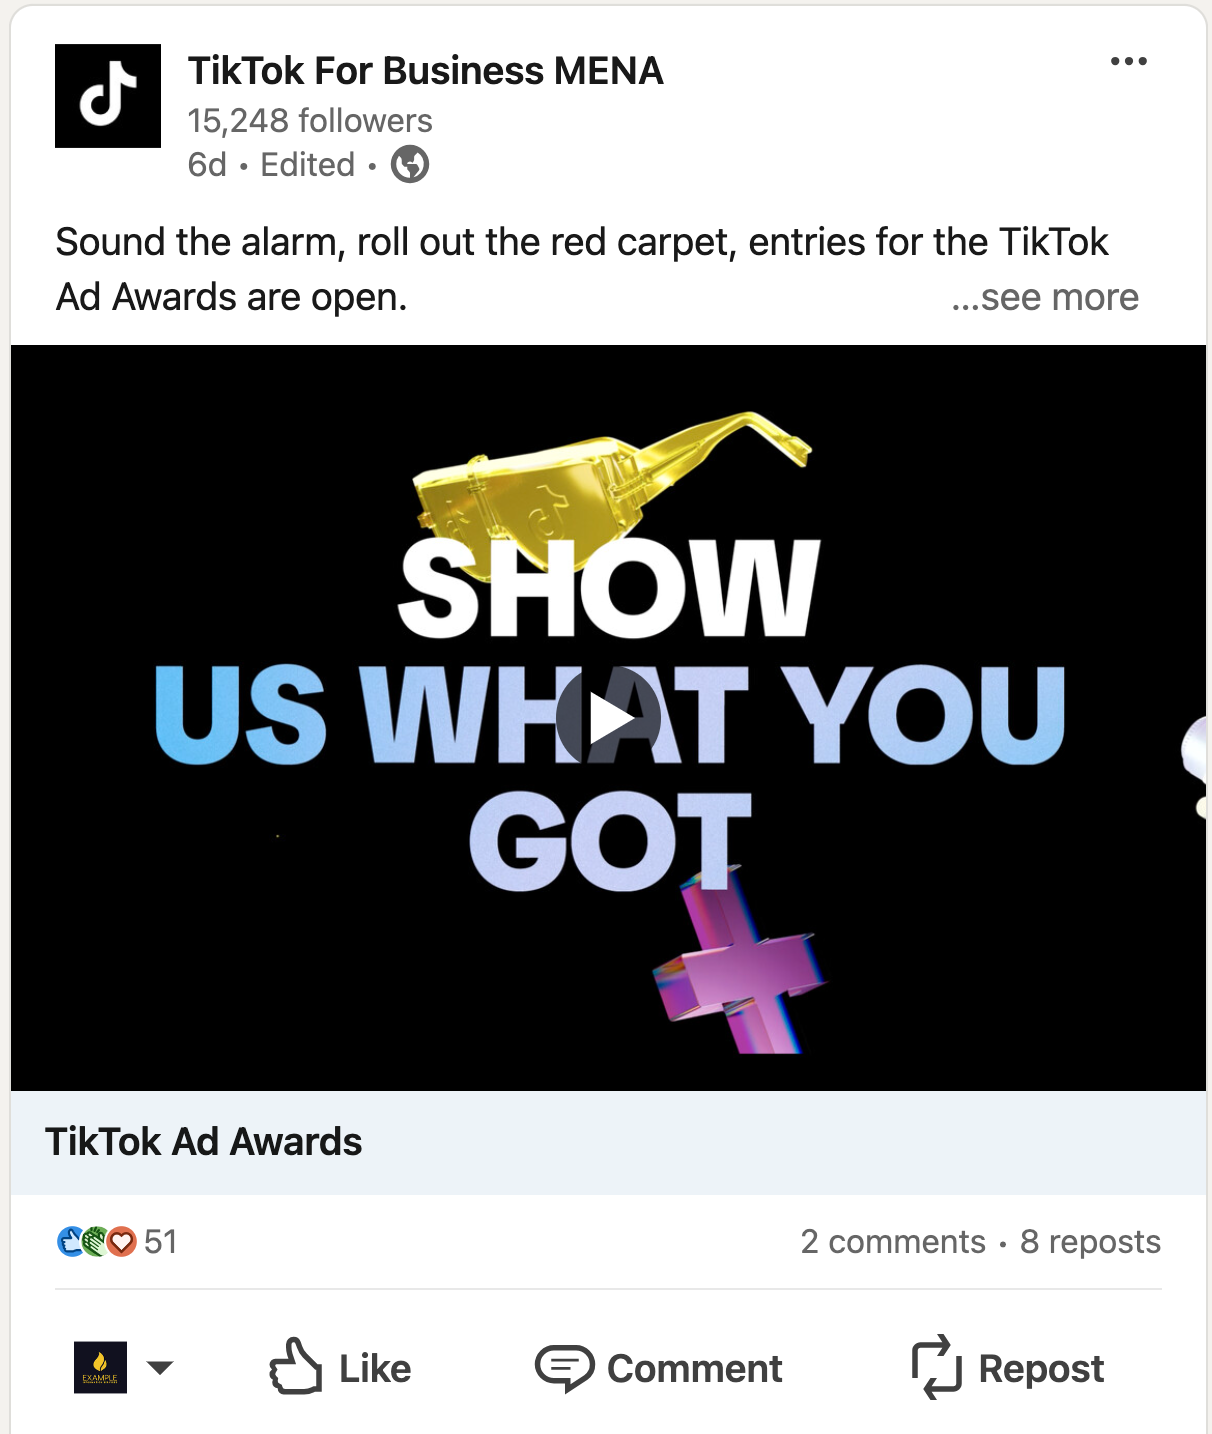 LinkedIn video ad for TikTok for Business MENA showing TikTok Ad Awards video